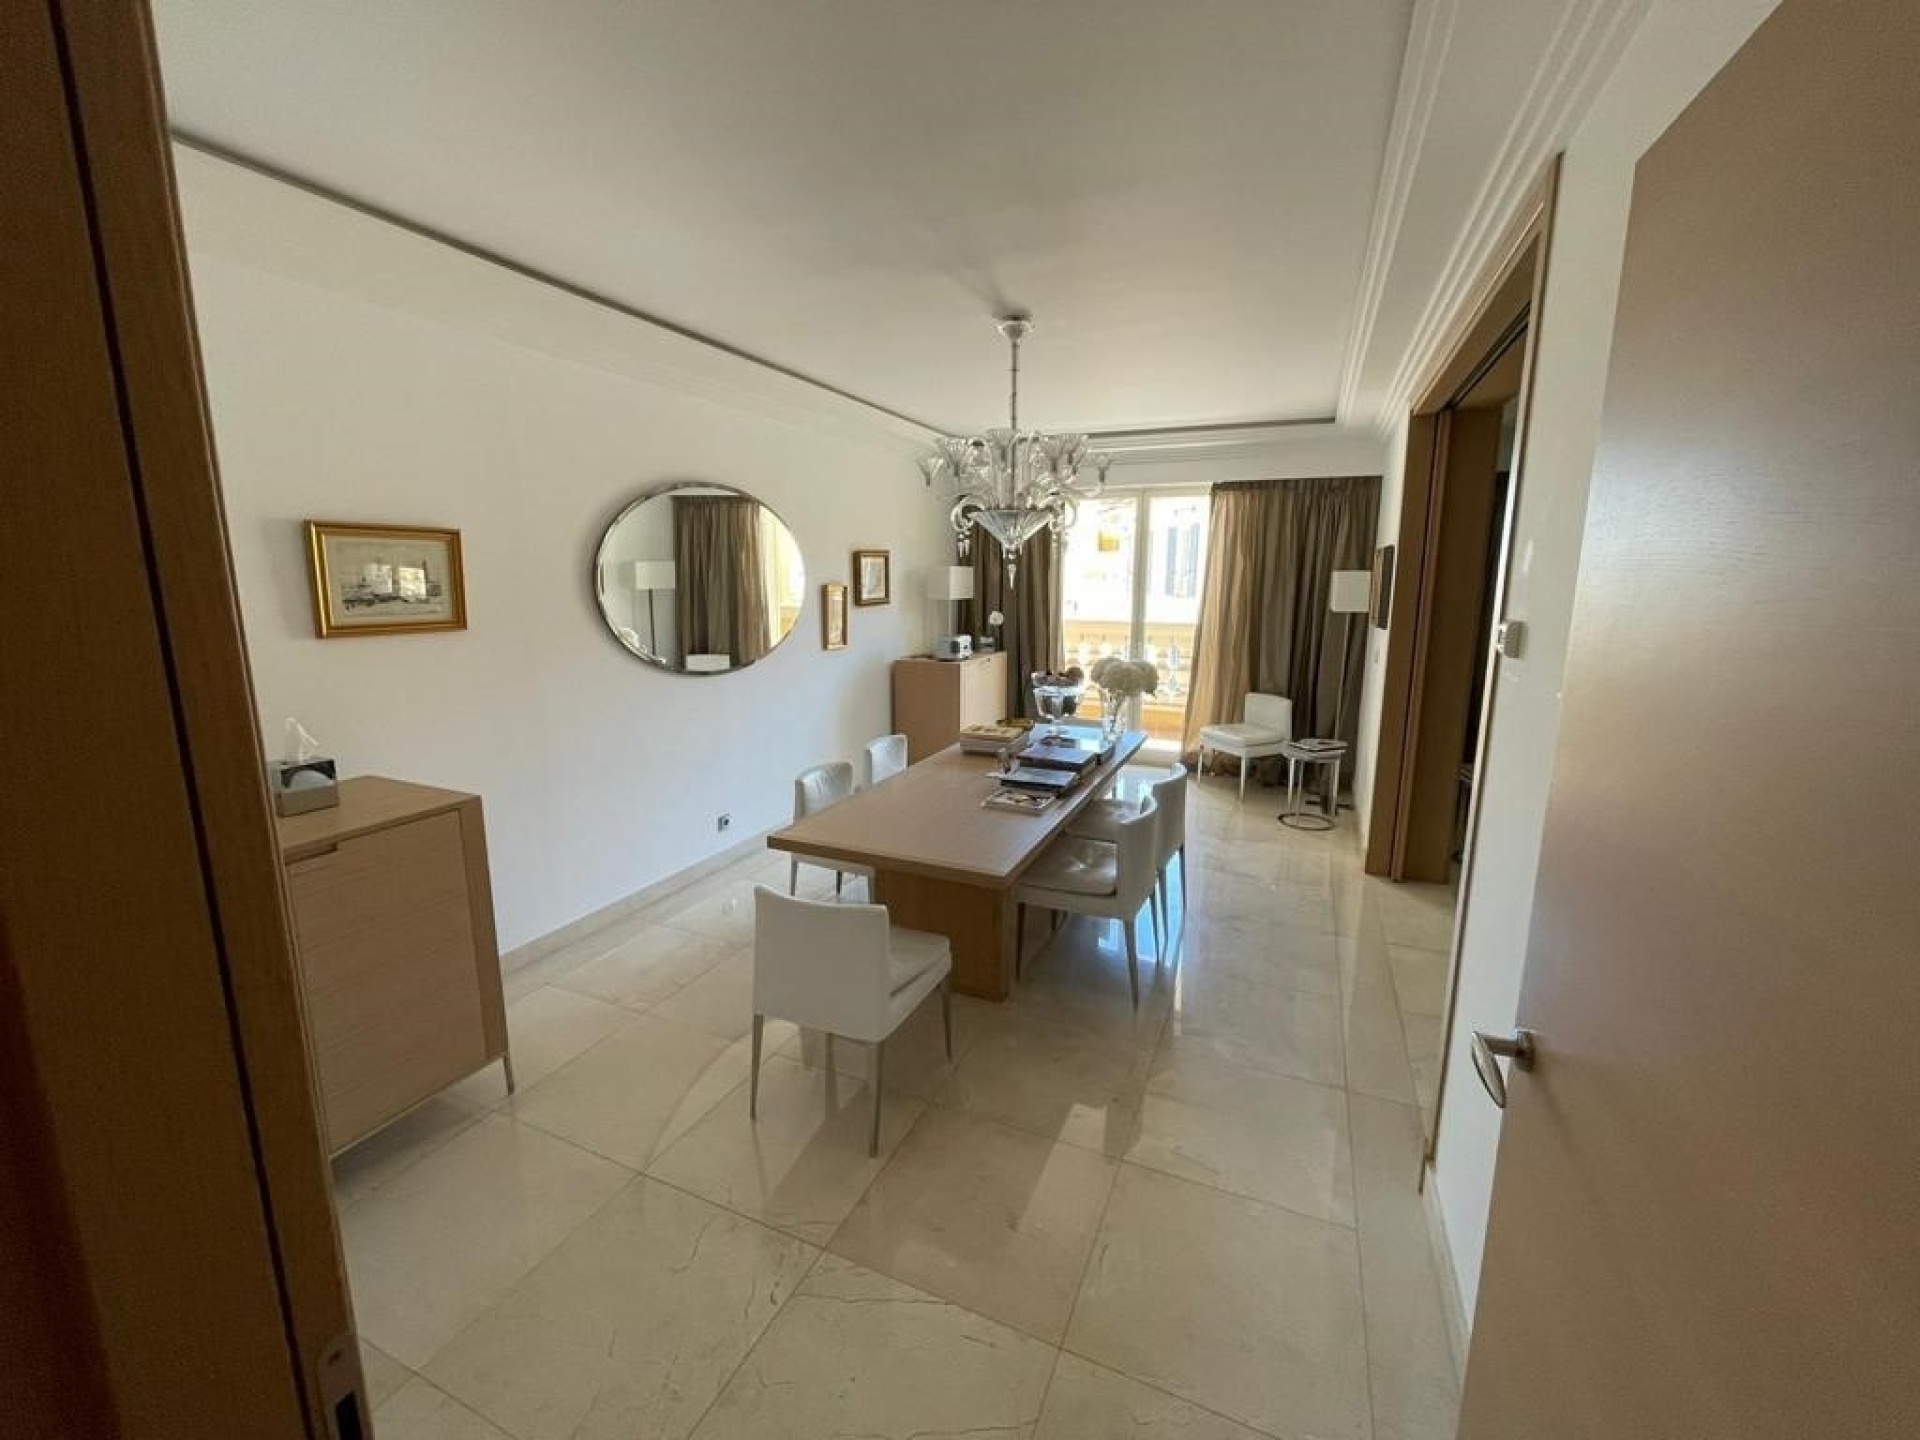 Dotta Appartement de 5 pieces a vendre - OISEAU BLEU - Moneghetti - Monaco - img8